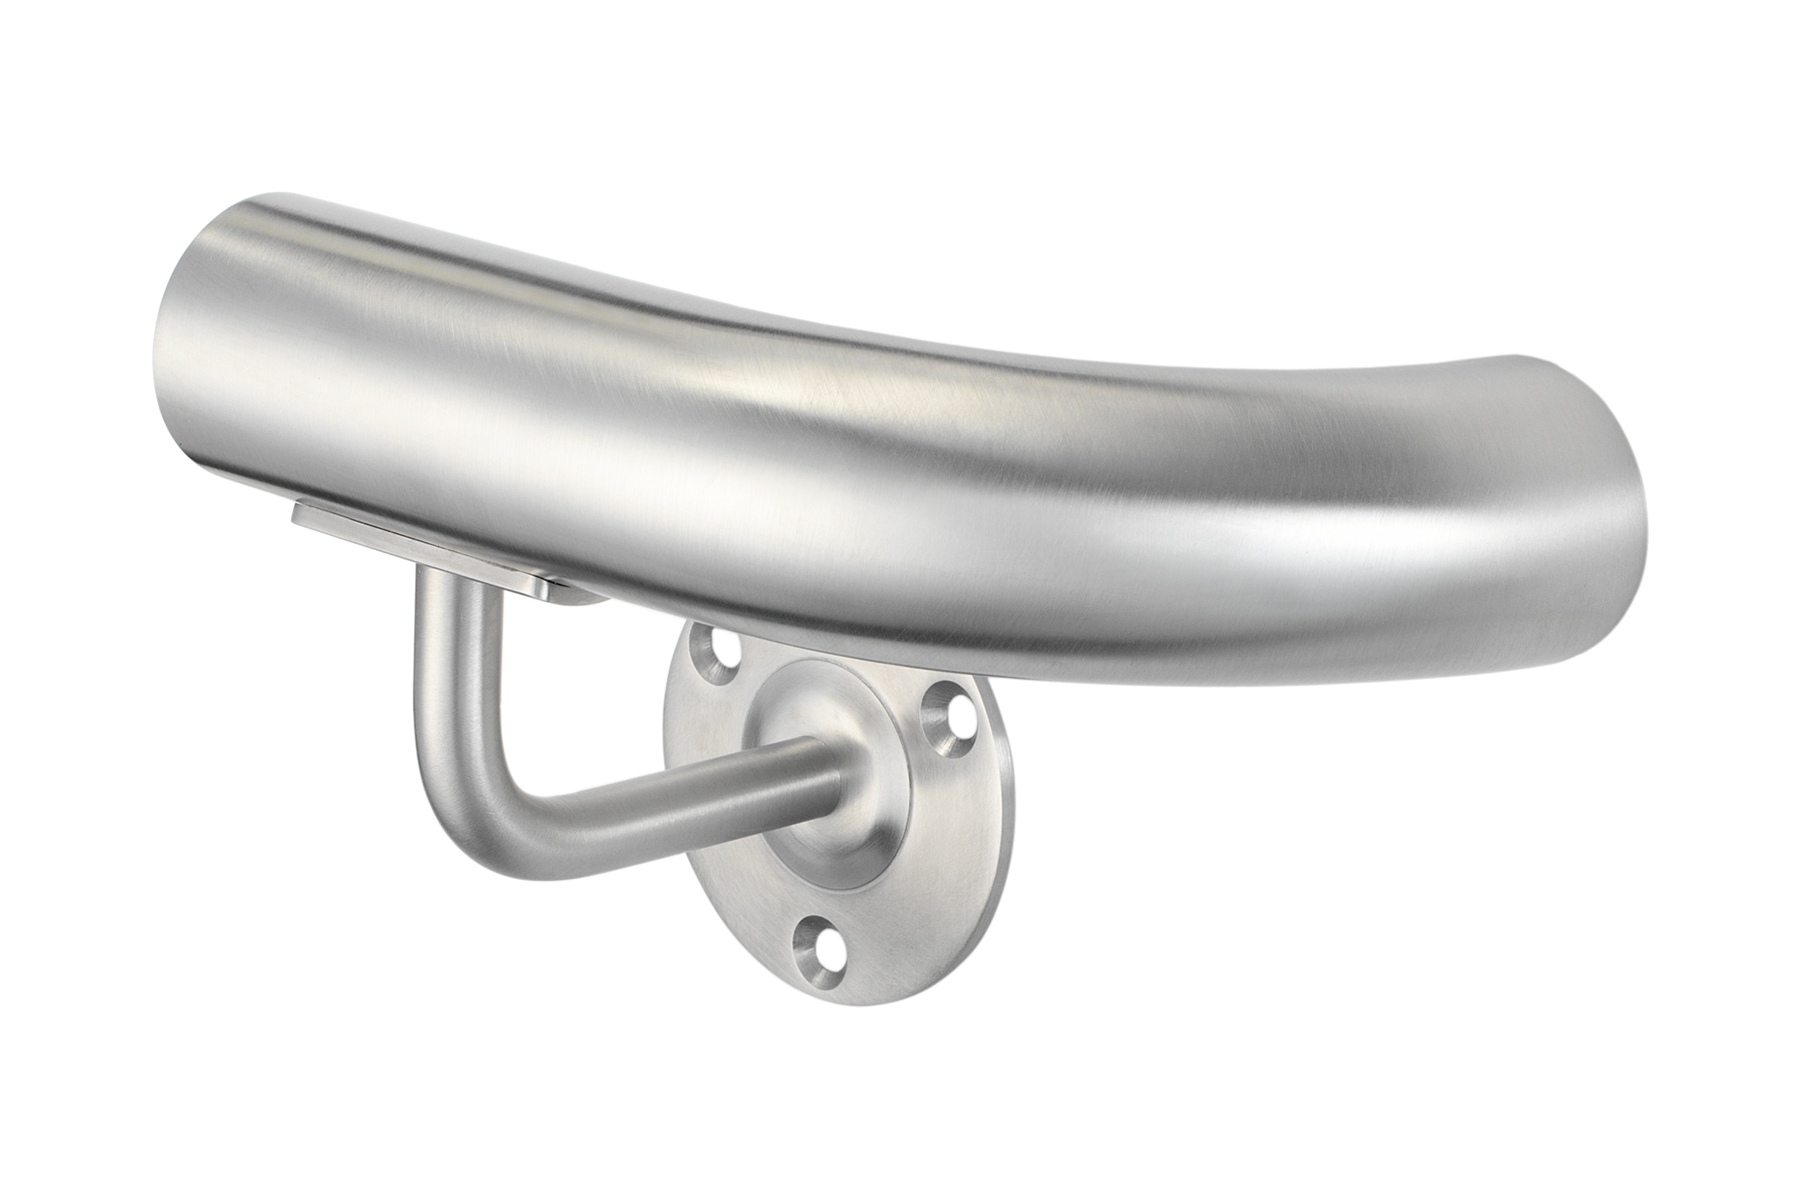 KWS Handrail support 4621 in finish 82 (stainless steel, matte)